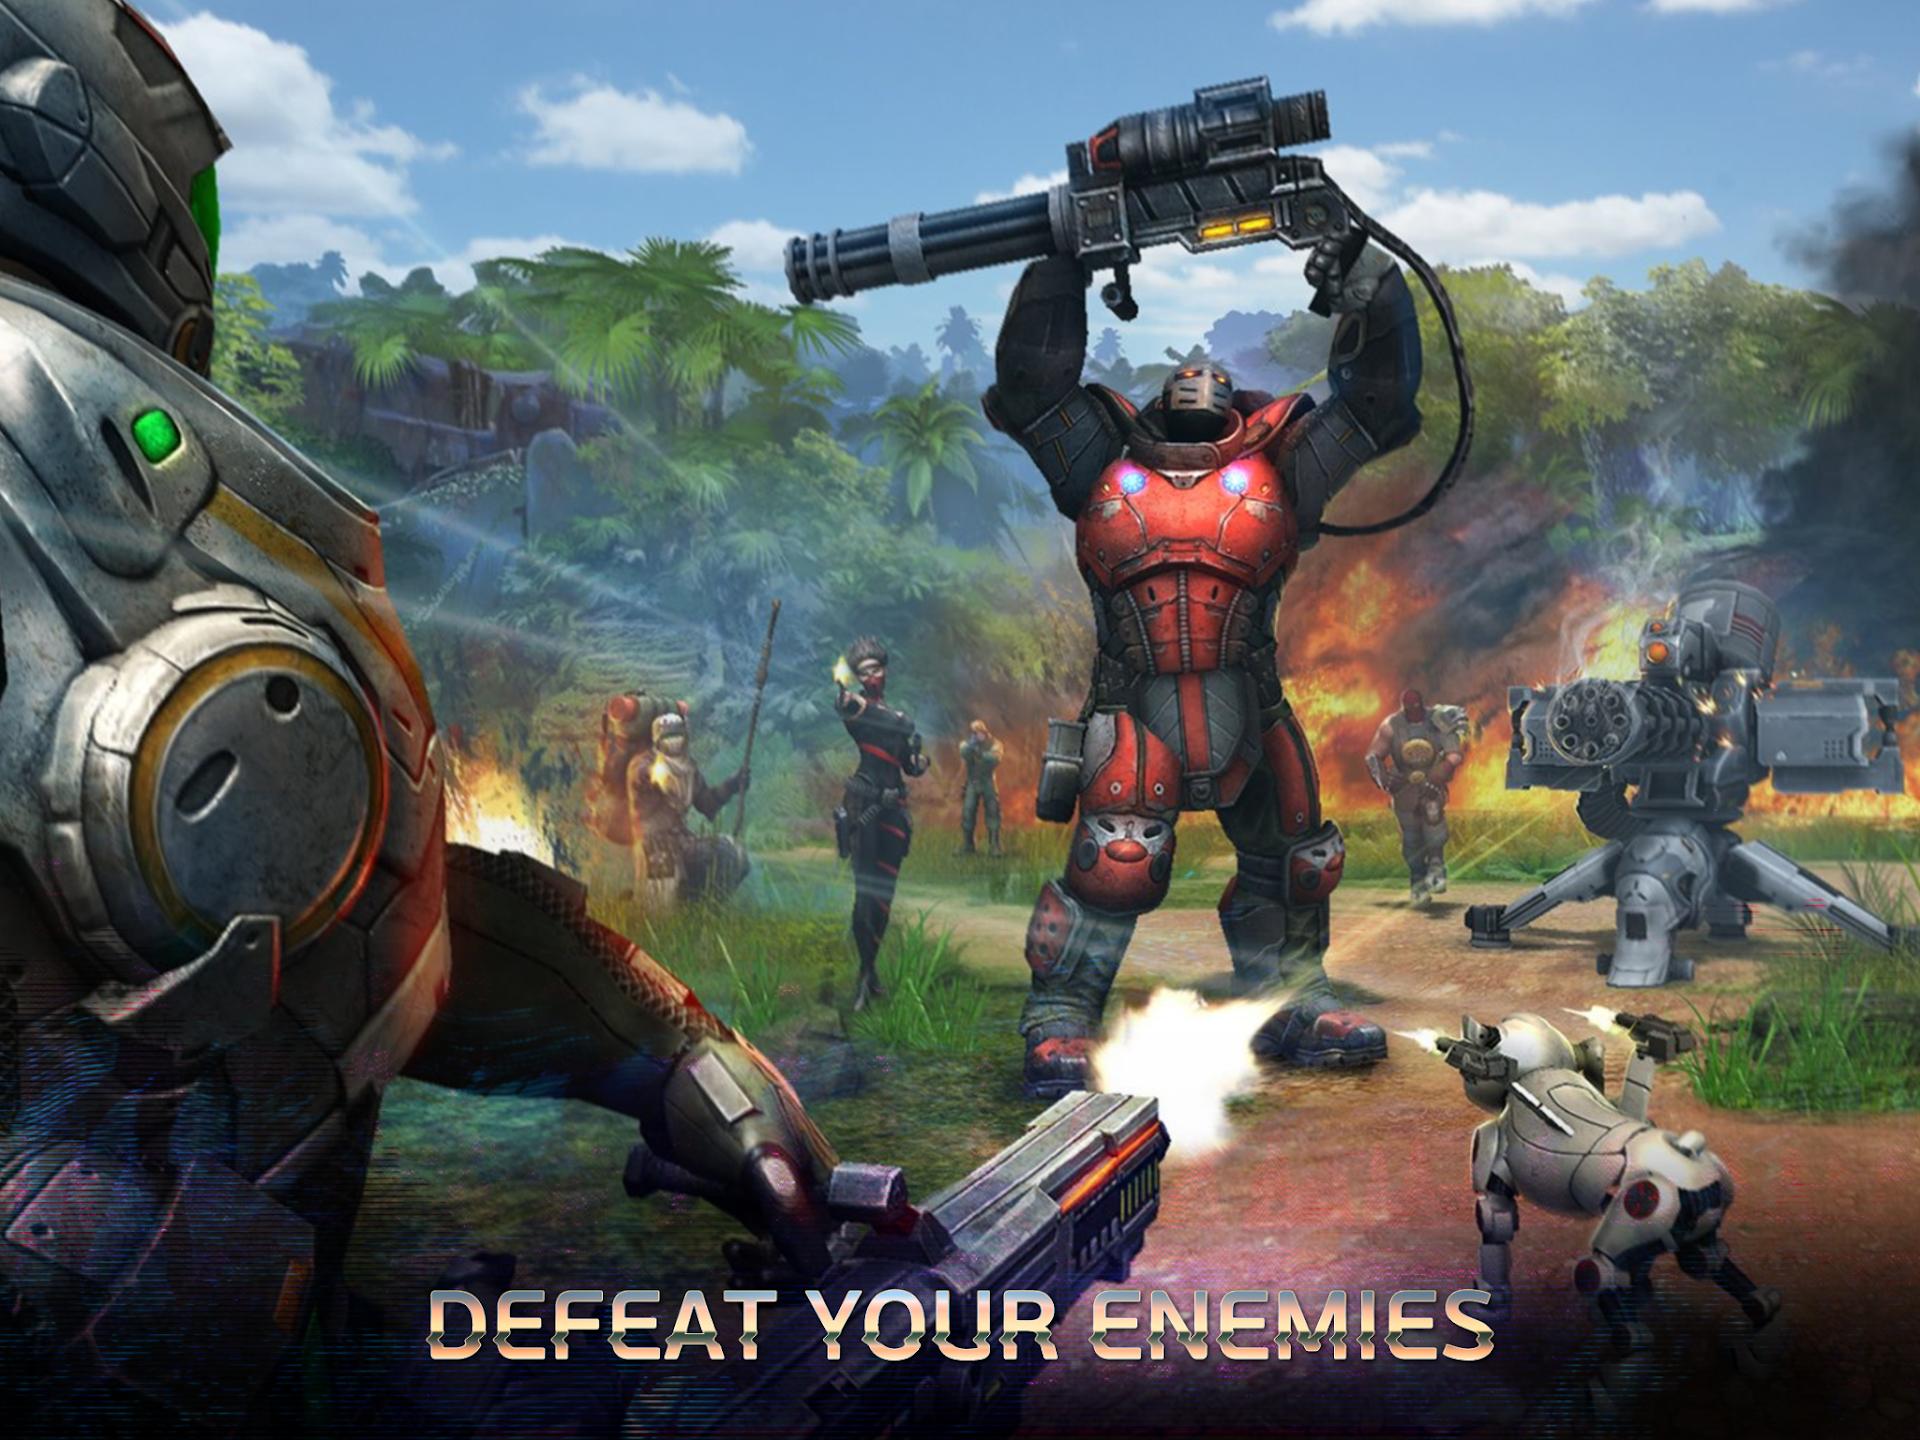 Evolution Battle for Utopia. Shooting games free 3.5.9 Screenshot 18